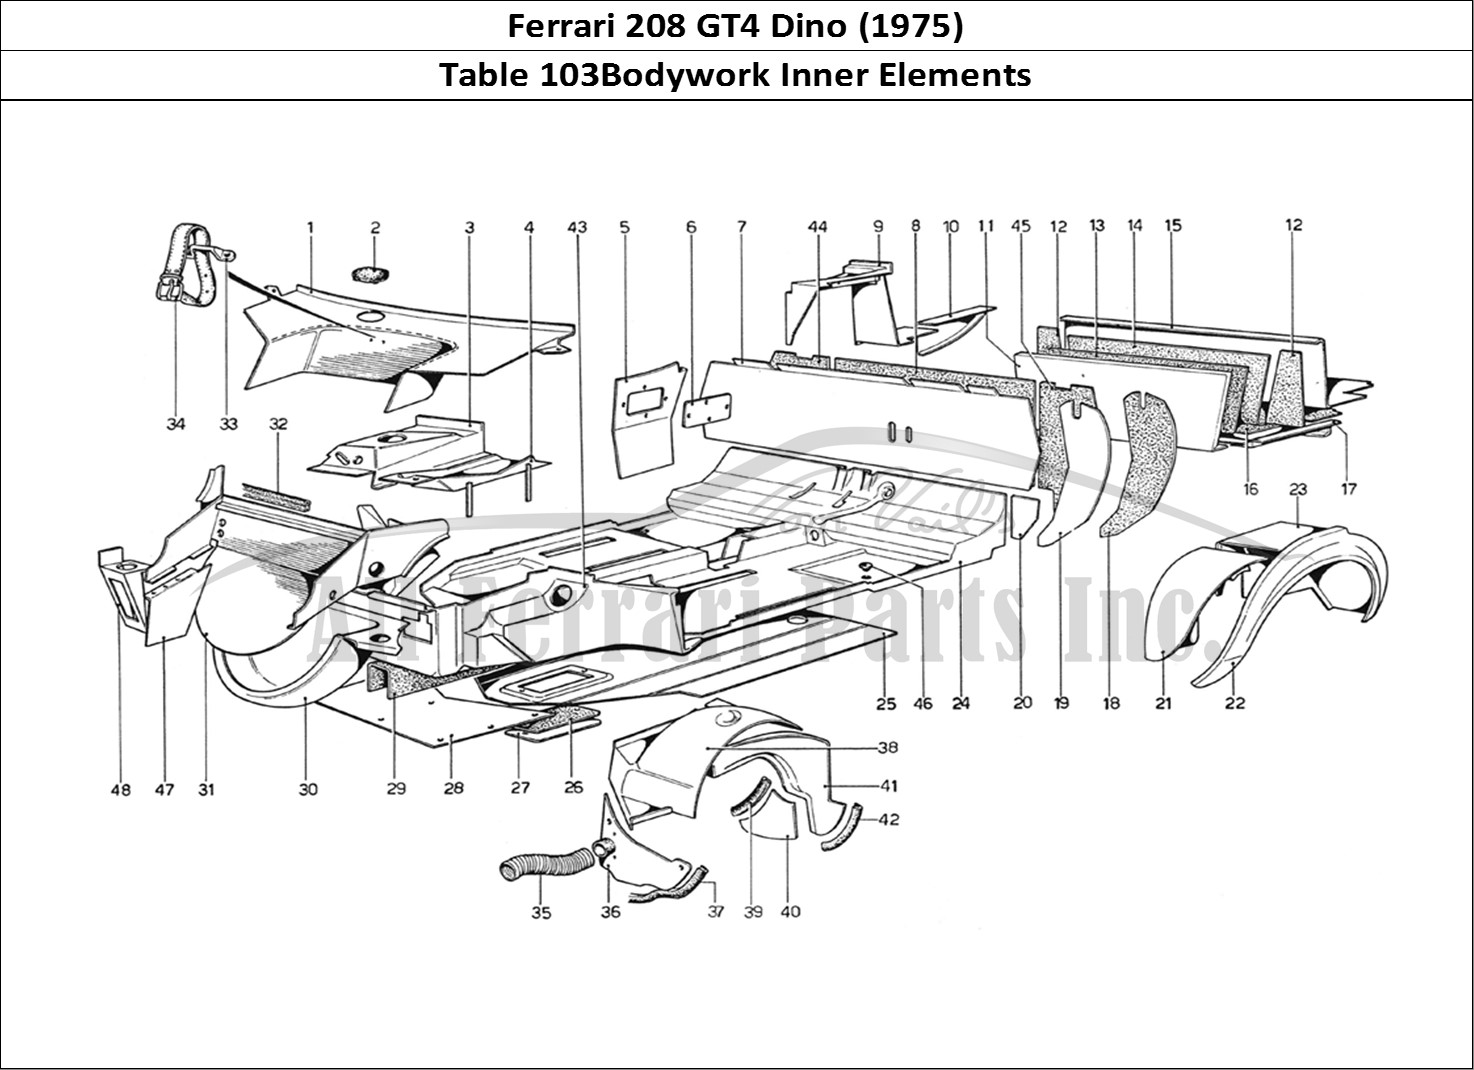 Ferrari Parts Ferrari 208 GT4 Dino (1975) Page 103 Body Shell - Inner Elemen